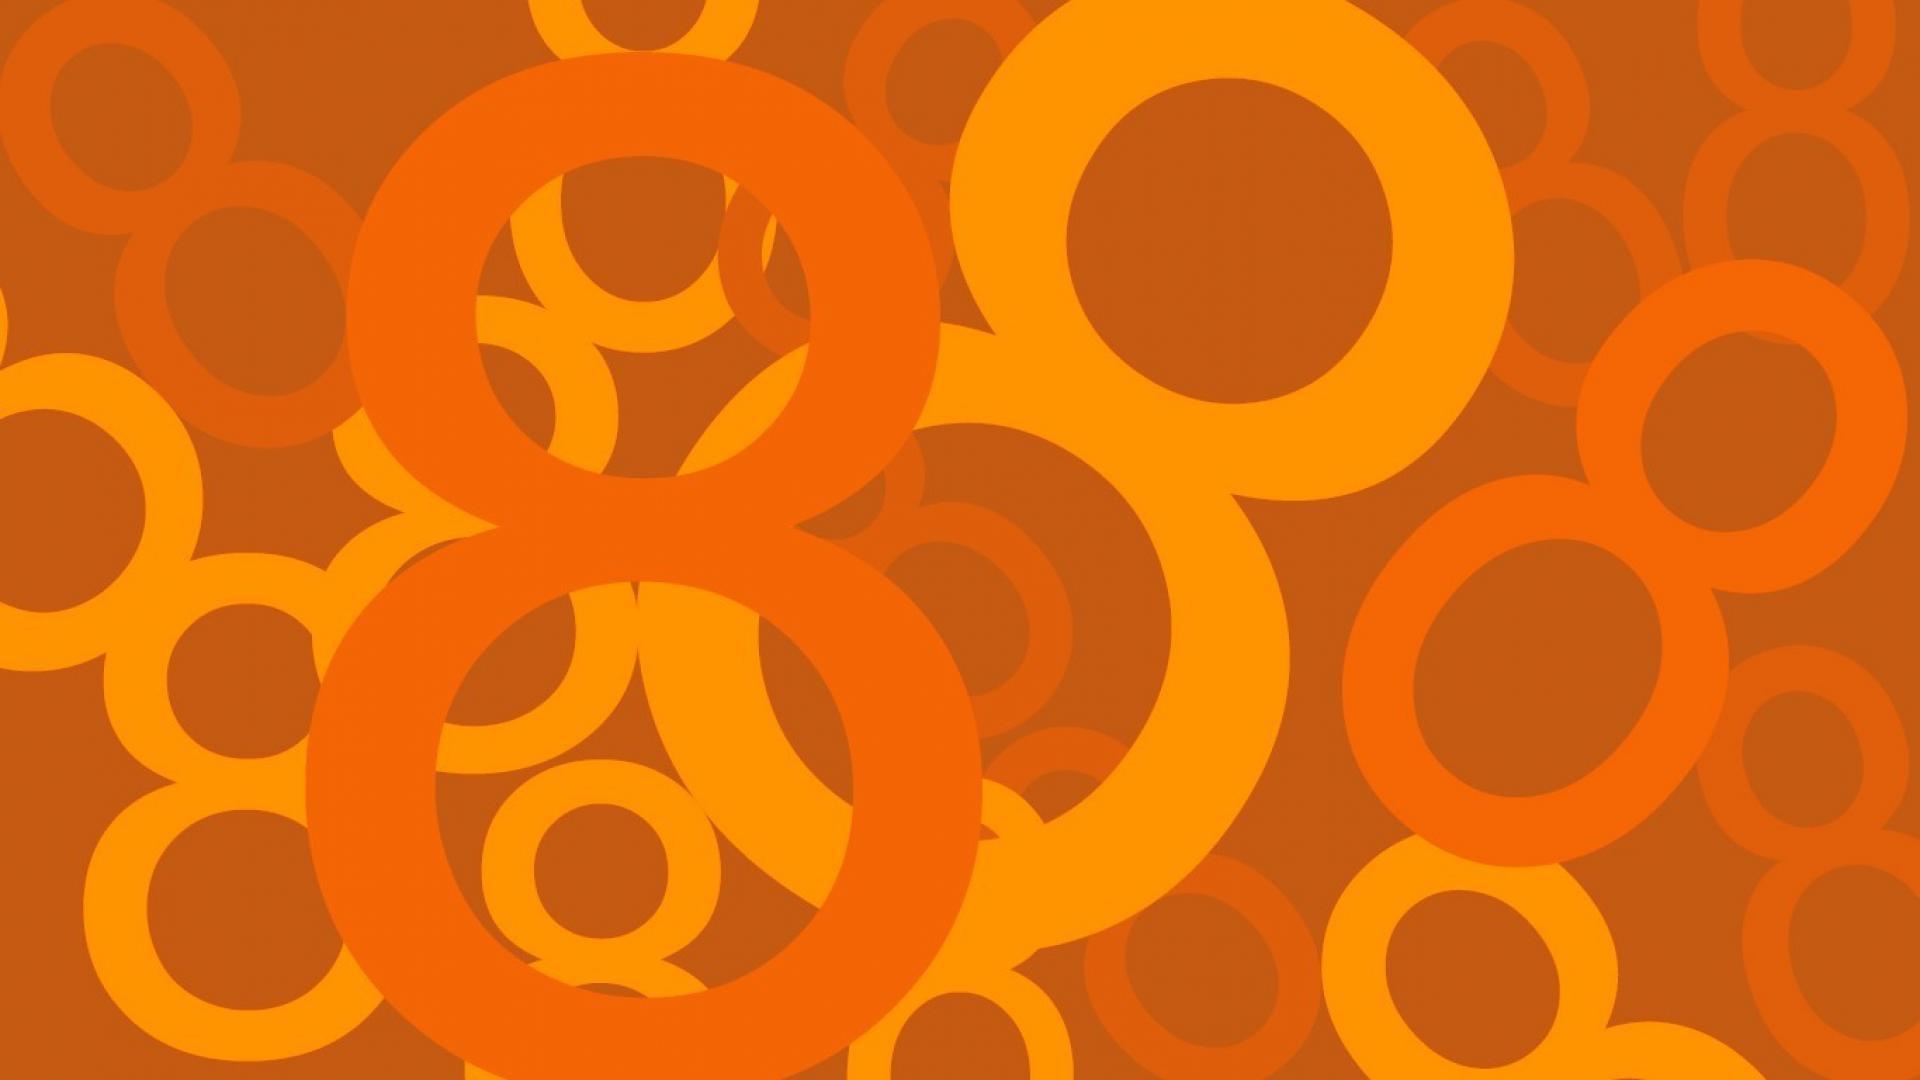 Orange microsoft operating systems windows 8 logos number 